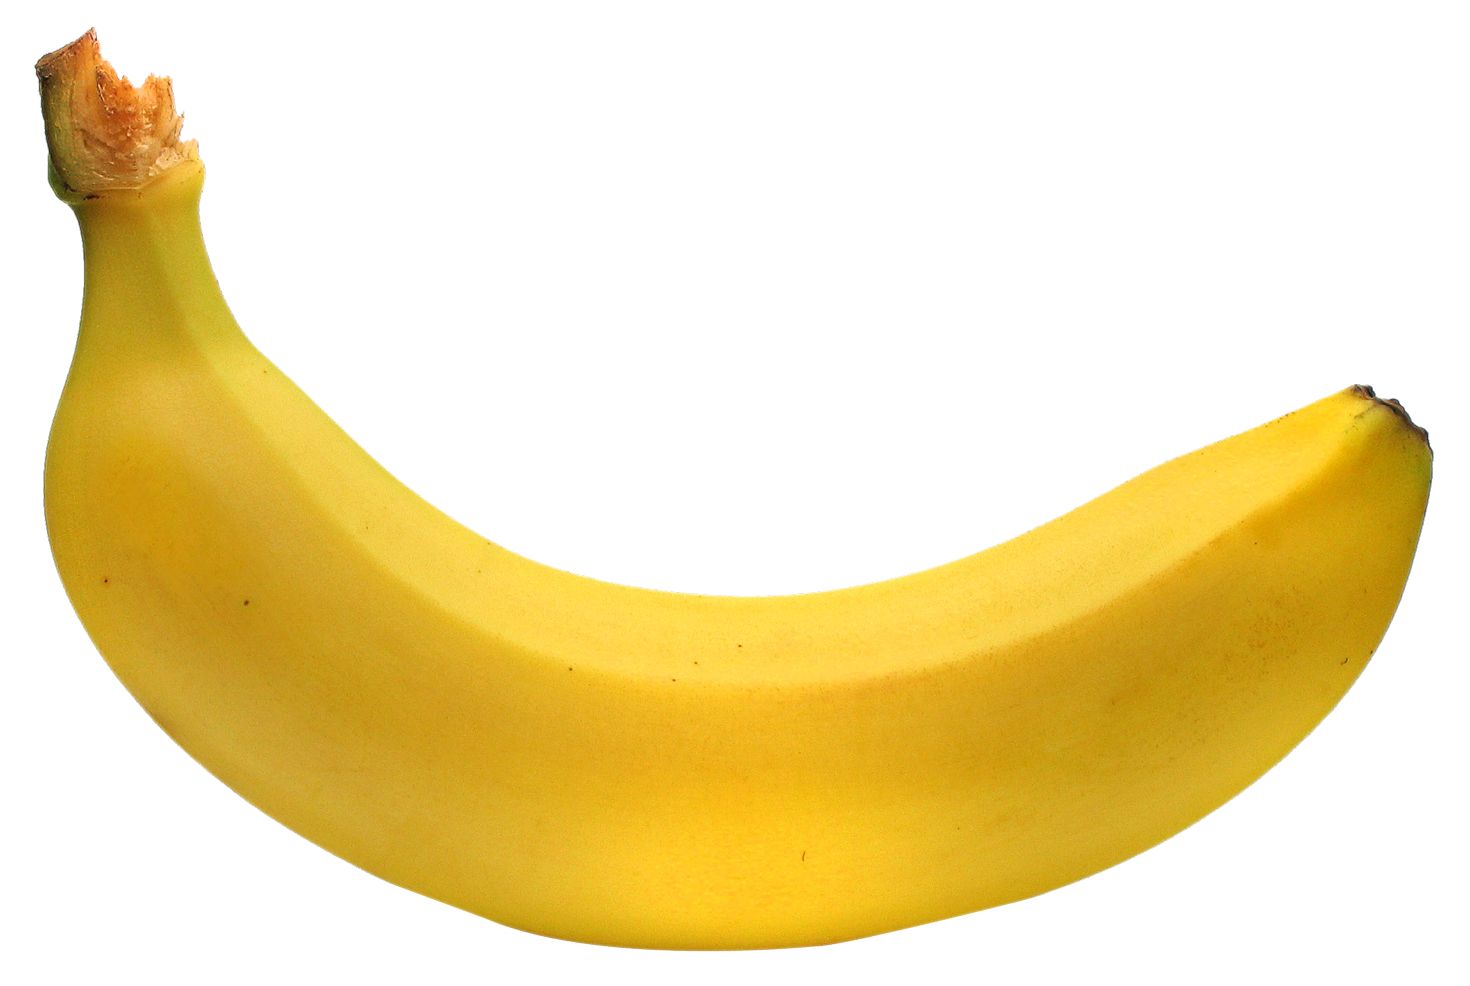 Ripe Yellow Banana PNG